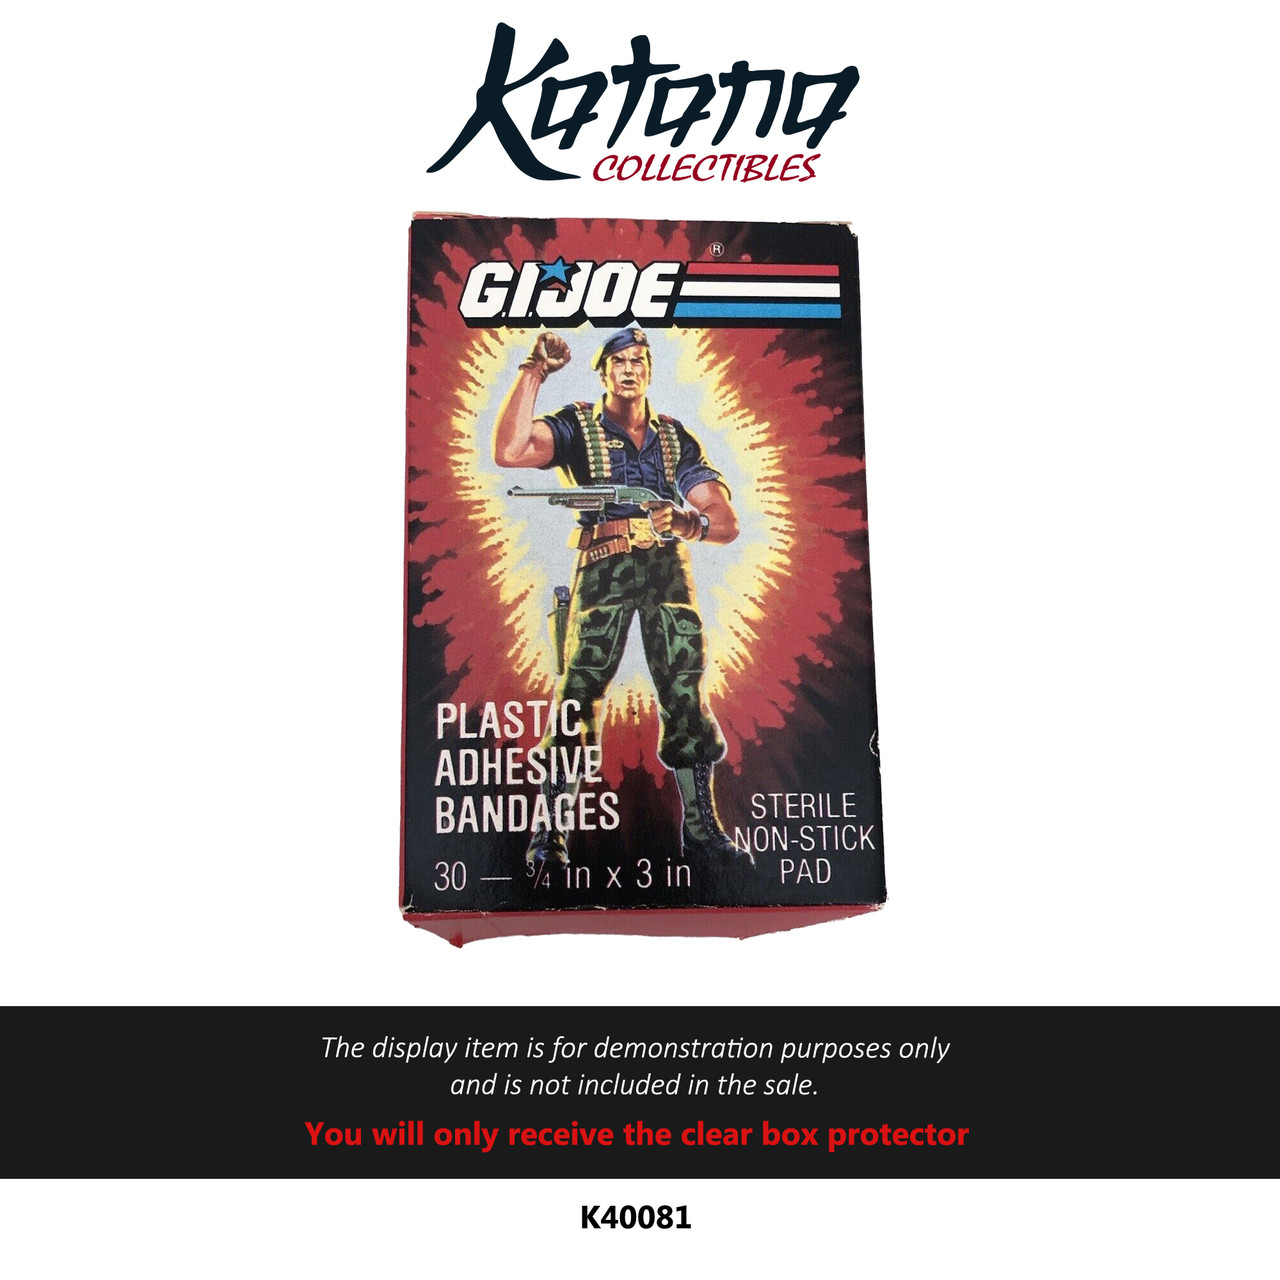 Katana Collectibles Protector For GI Joe Plastic Adhesive Bandages 30-Pack